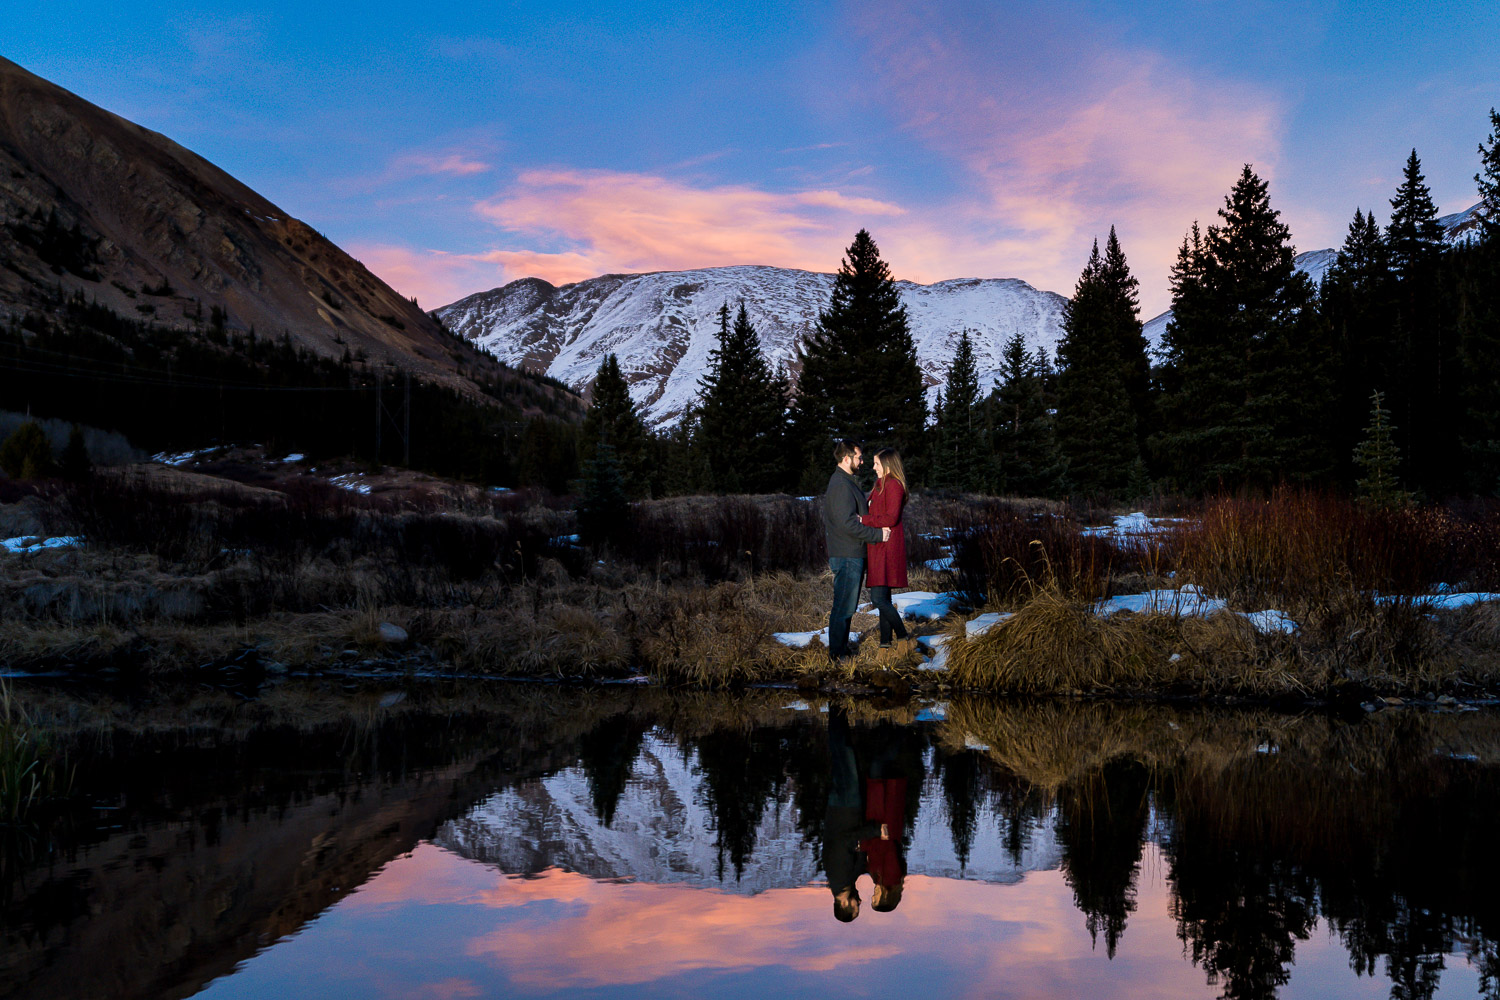 Colorado Mountain Engagement Photos with mountain backdrop in lake reflection